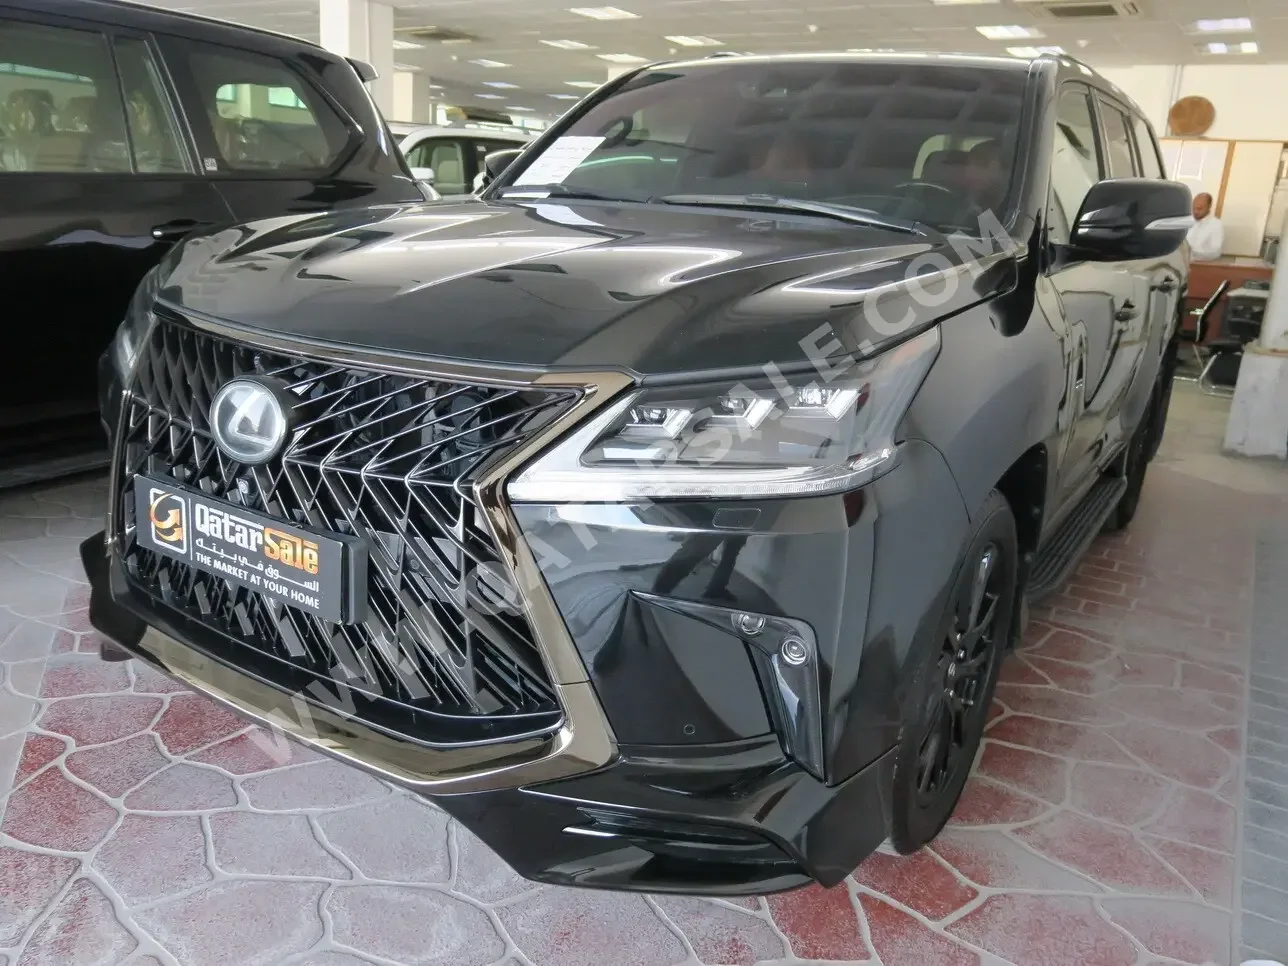 Lexus  LX  570 S Black Edition  2019  Automatic  70,000 Km  8 Cylinder  Four Wheel Drive (4WD)  SUV  Black